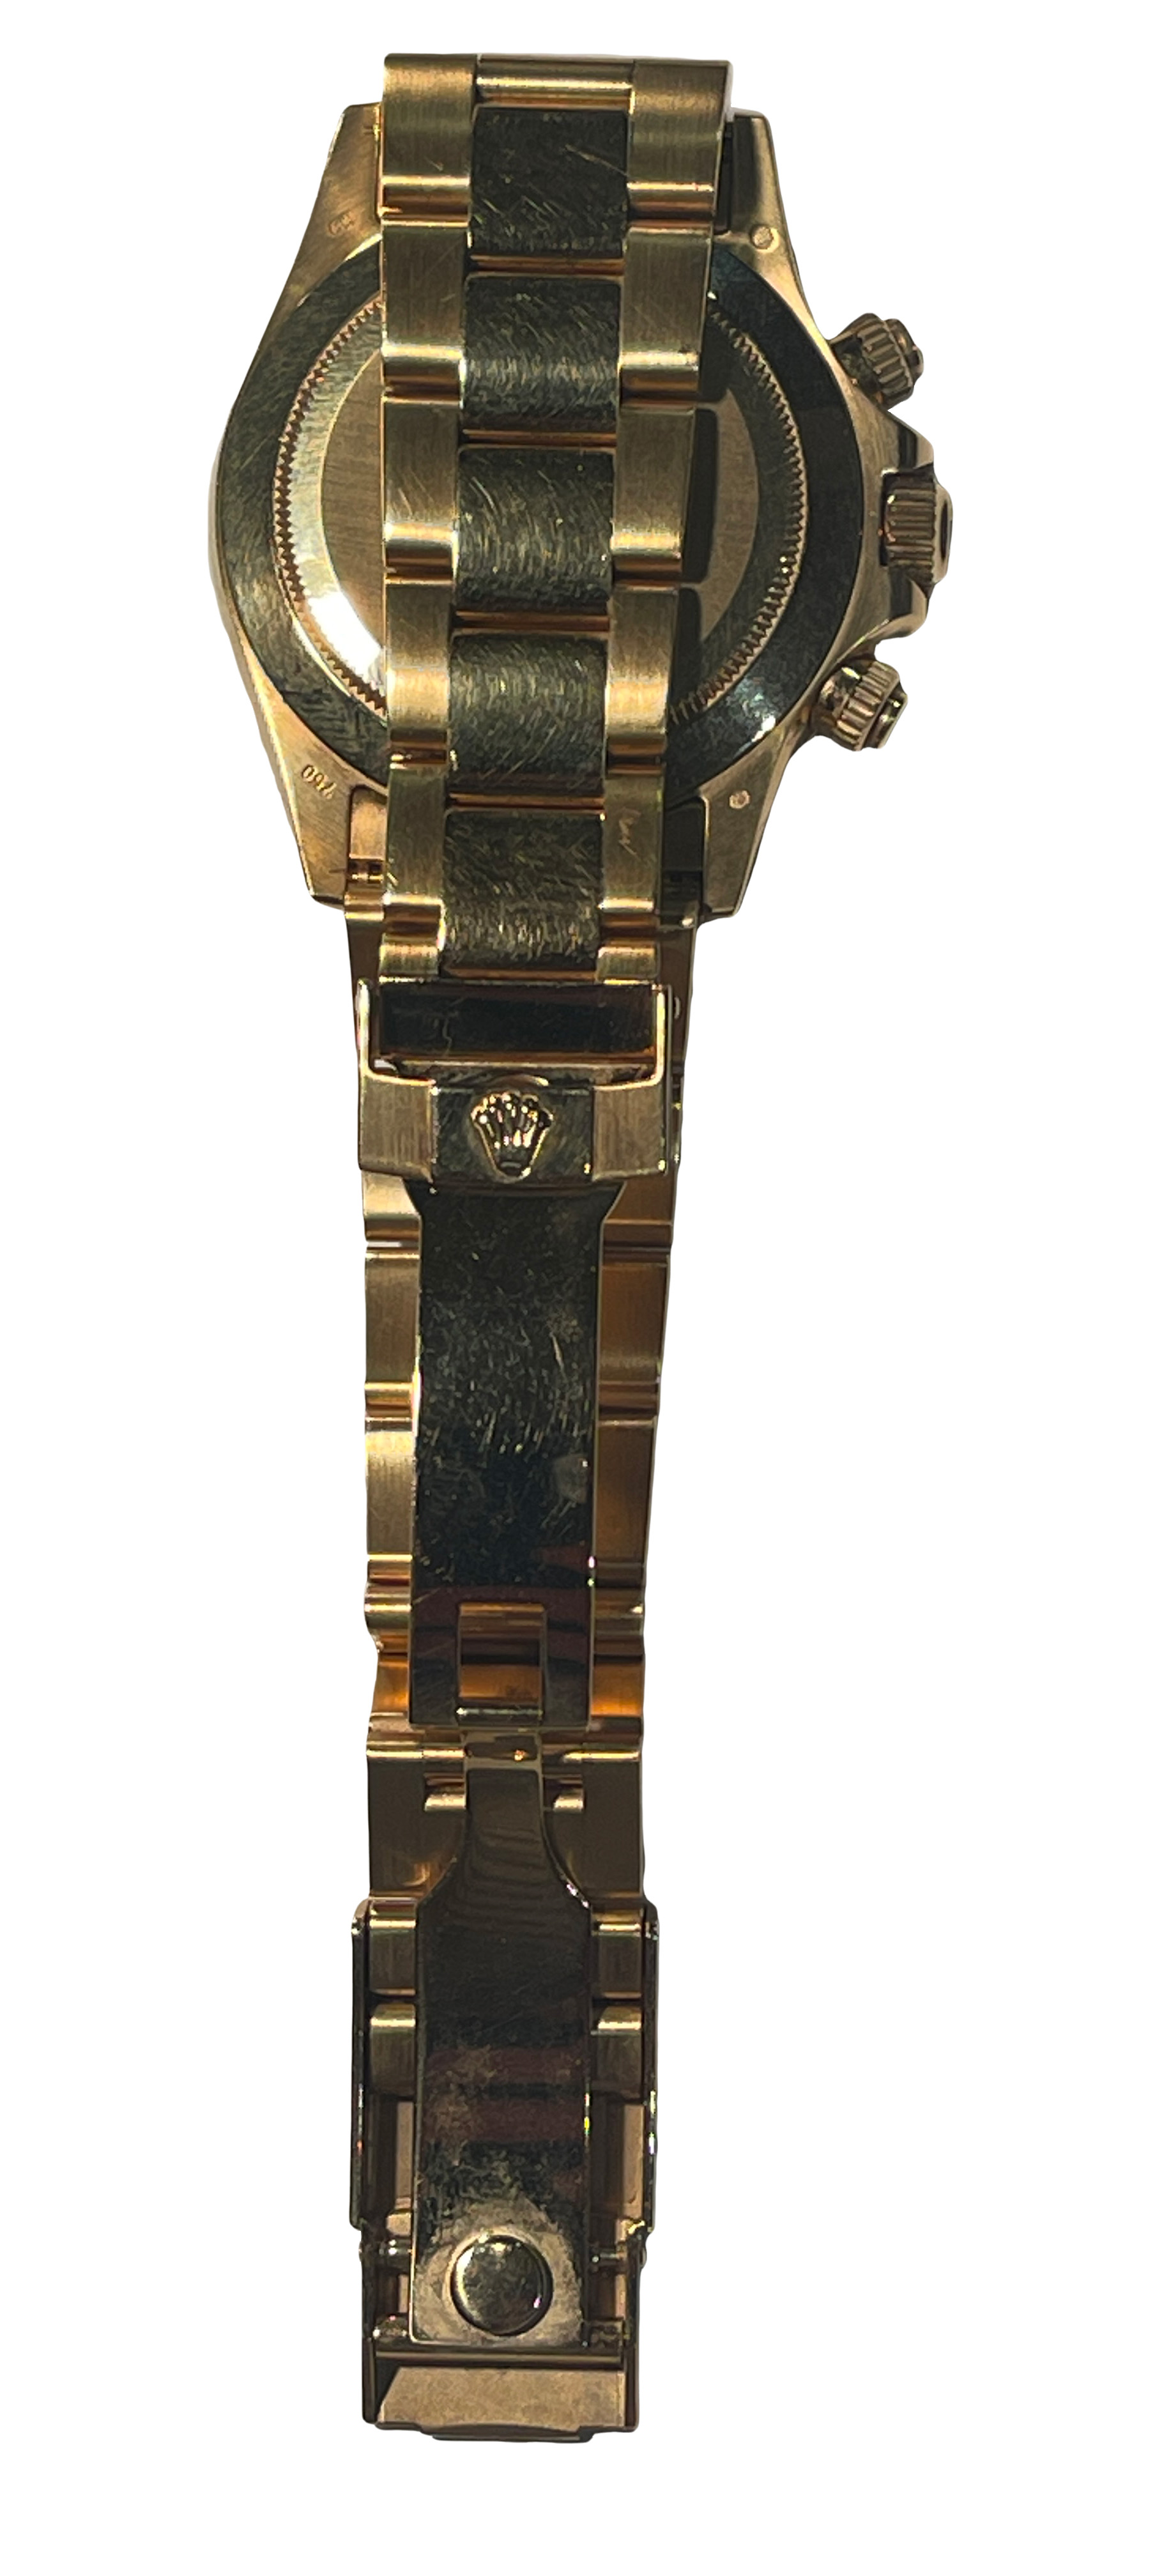 Rolex, Year 2010, #116528 40mm, Movement AUTOMATIC Chronograph, Model: Daytona Yellow Gold, Black - Image 4 of 5